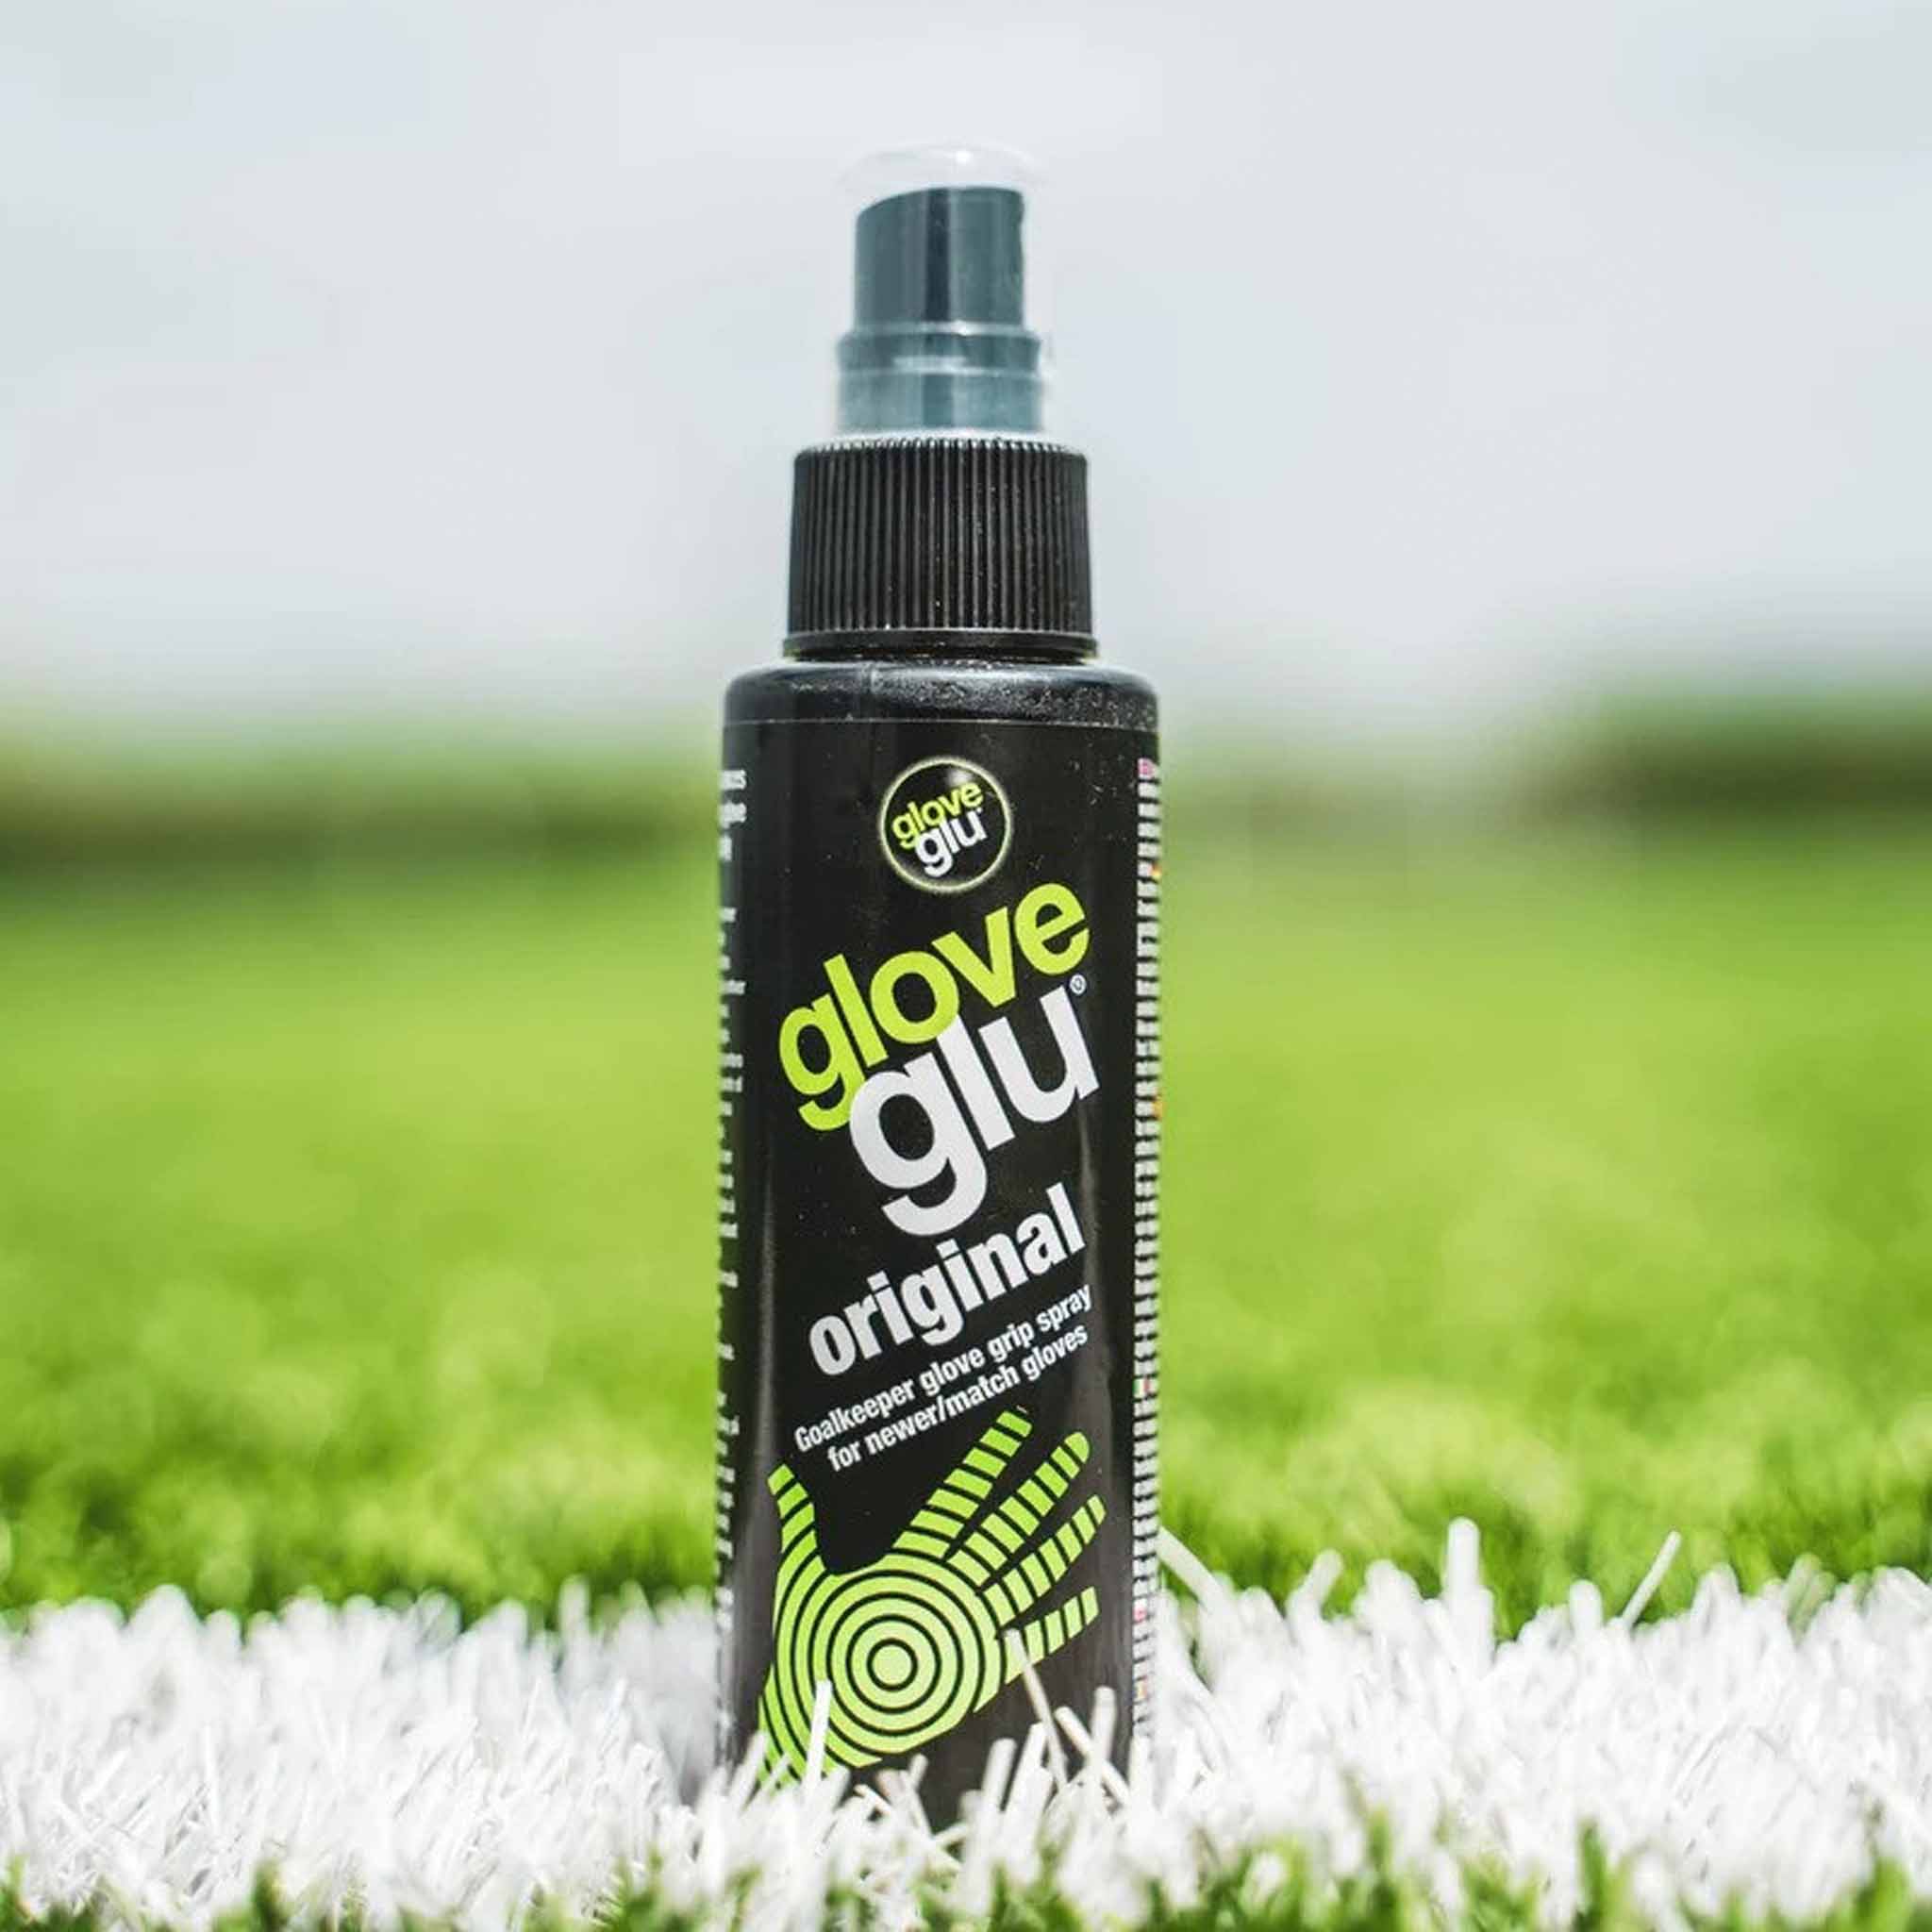 GloveGlu Original Grip Spray for soccer gloves - 120 ml - Soccer Sport  Fitness